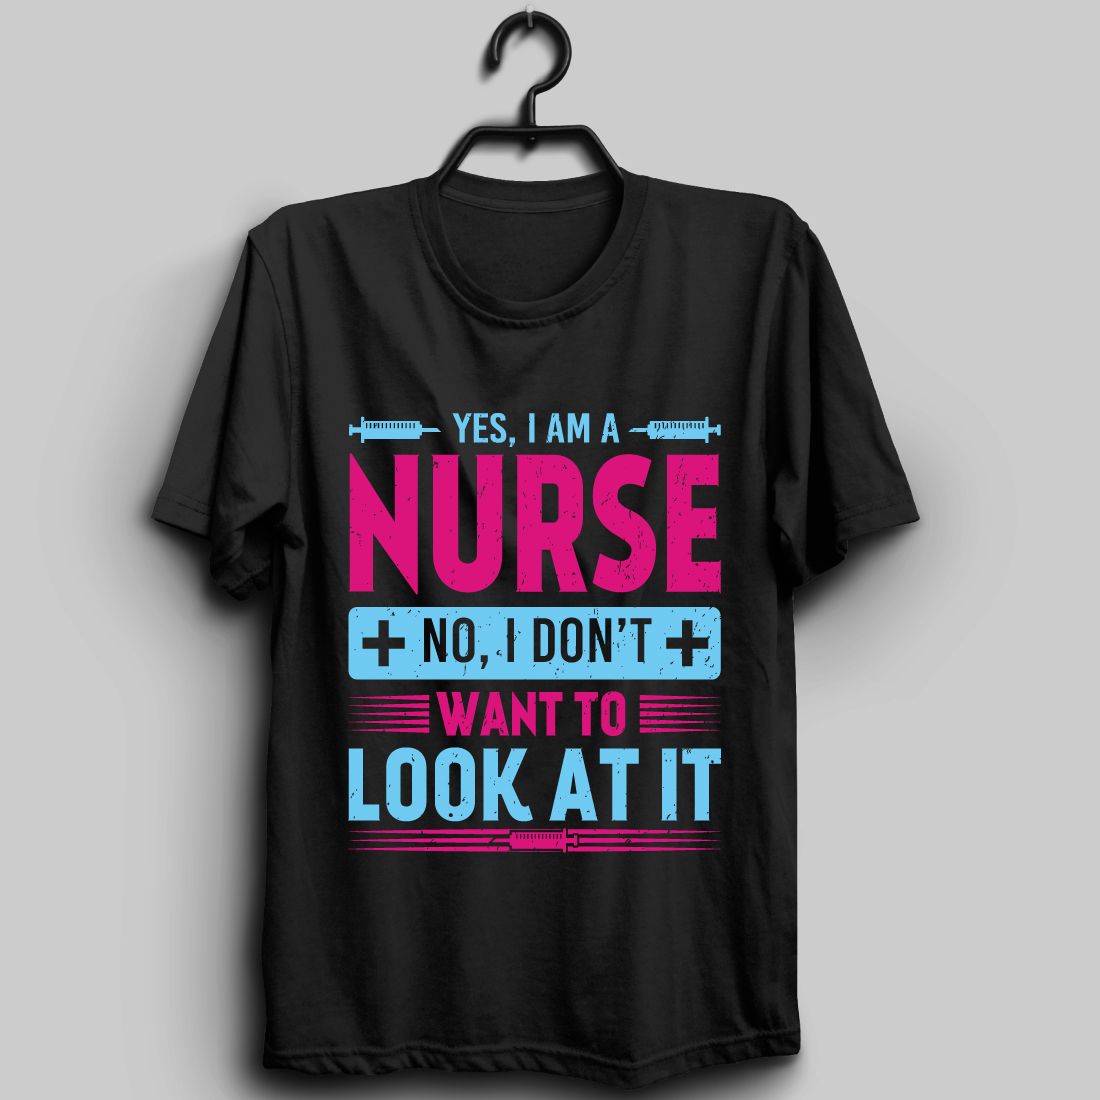 nurse t shirt design 04 865